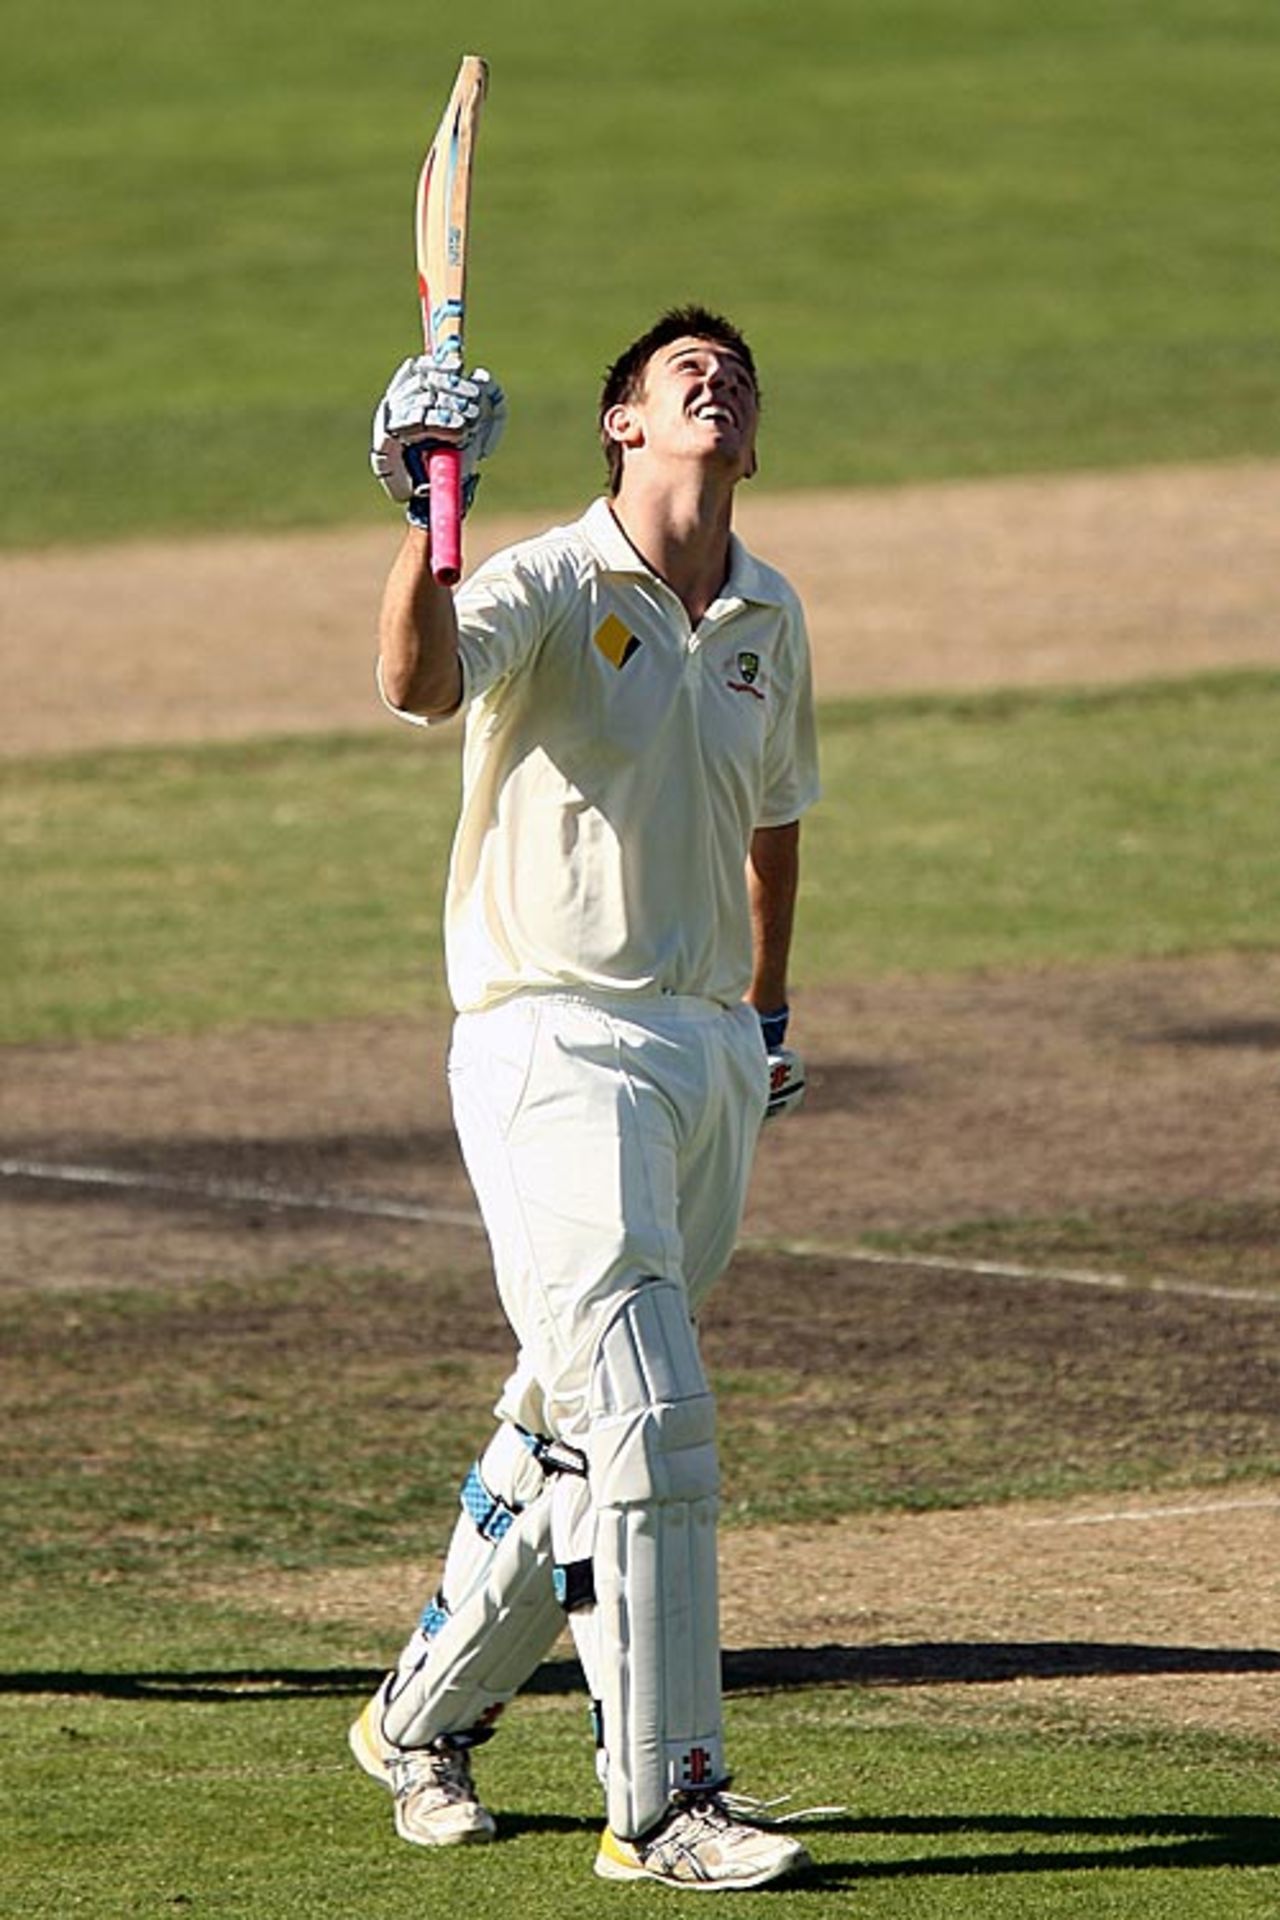 Mitchell Marsh celebrates, Australia Under-19 v India Under-19, 1st Test, Hobart, 3rd day, April 13, 2009